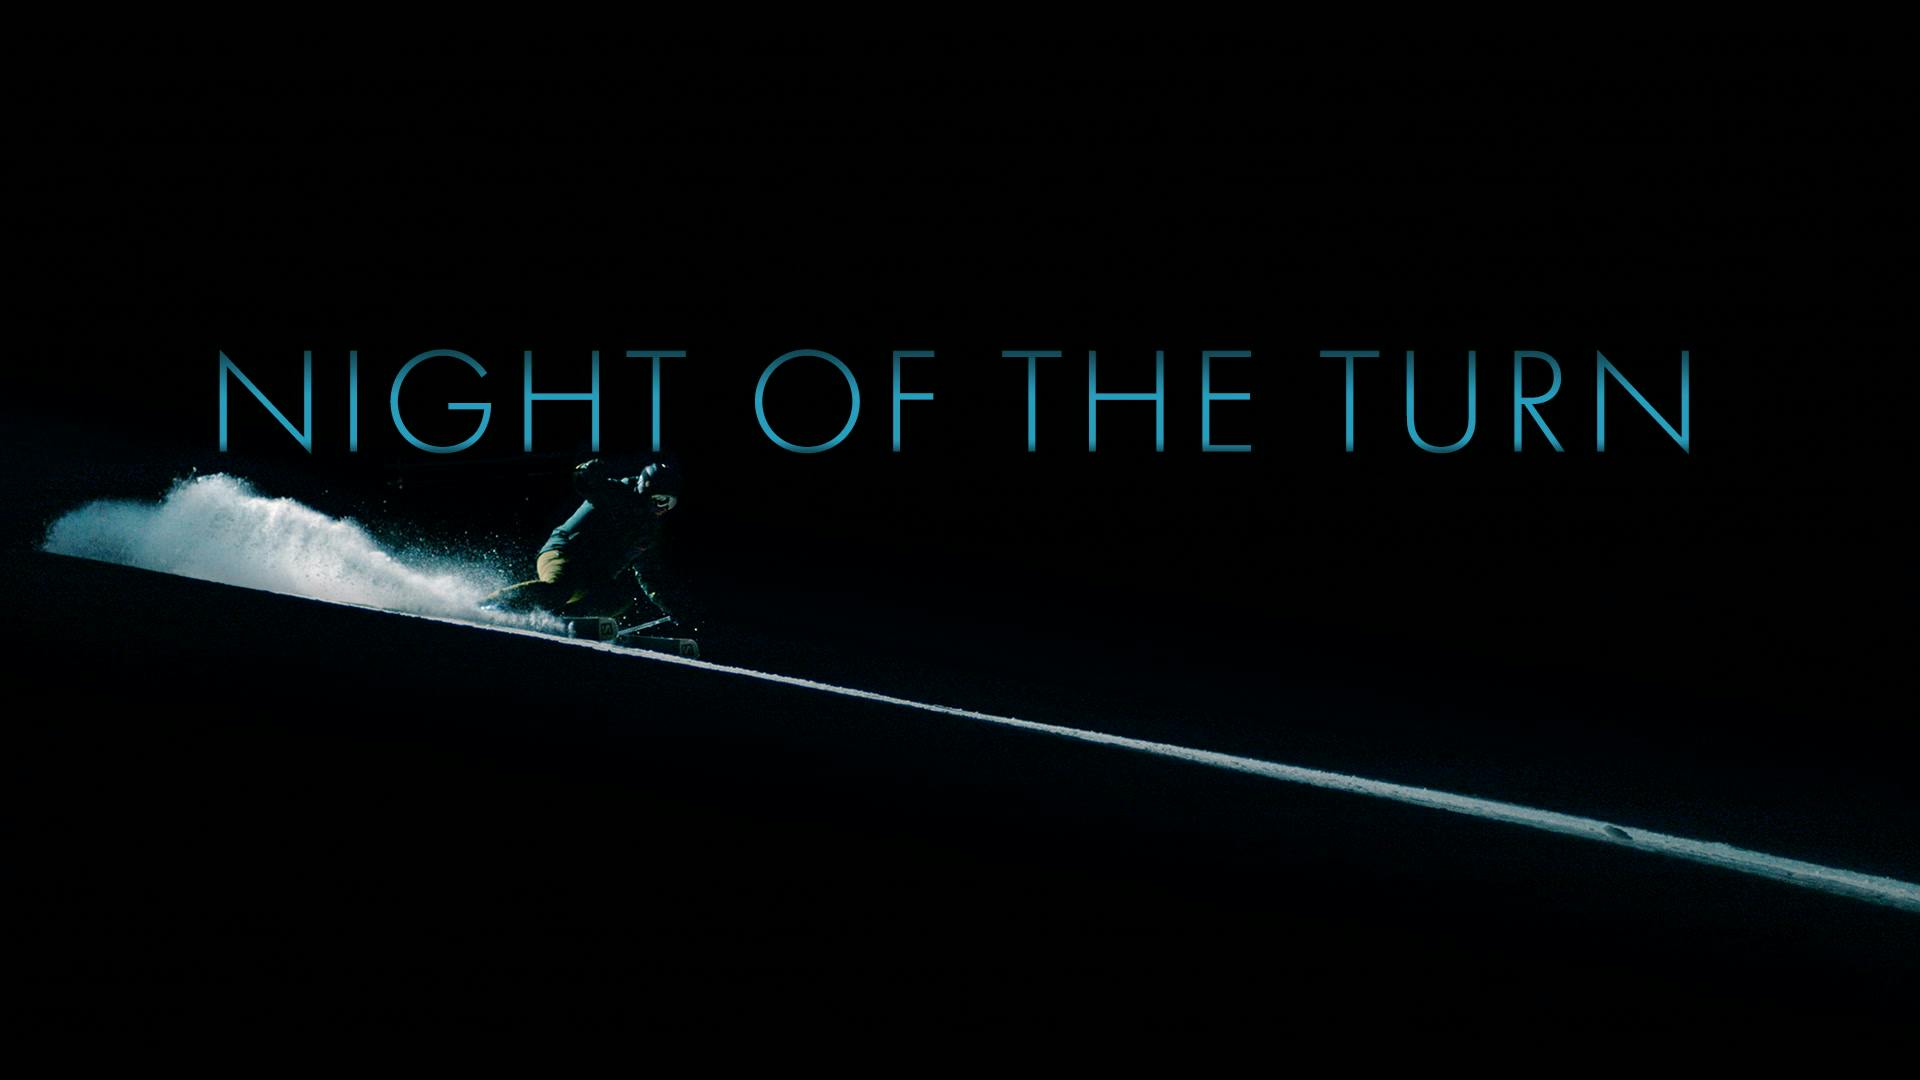 Night Of The Turn | Salomon TV